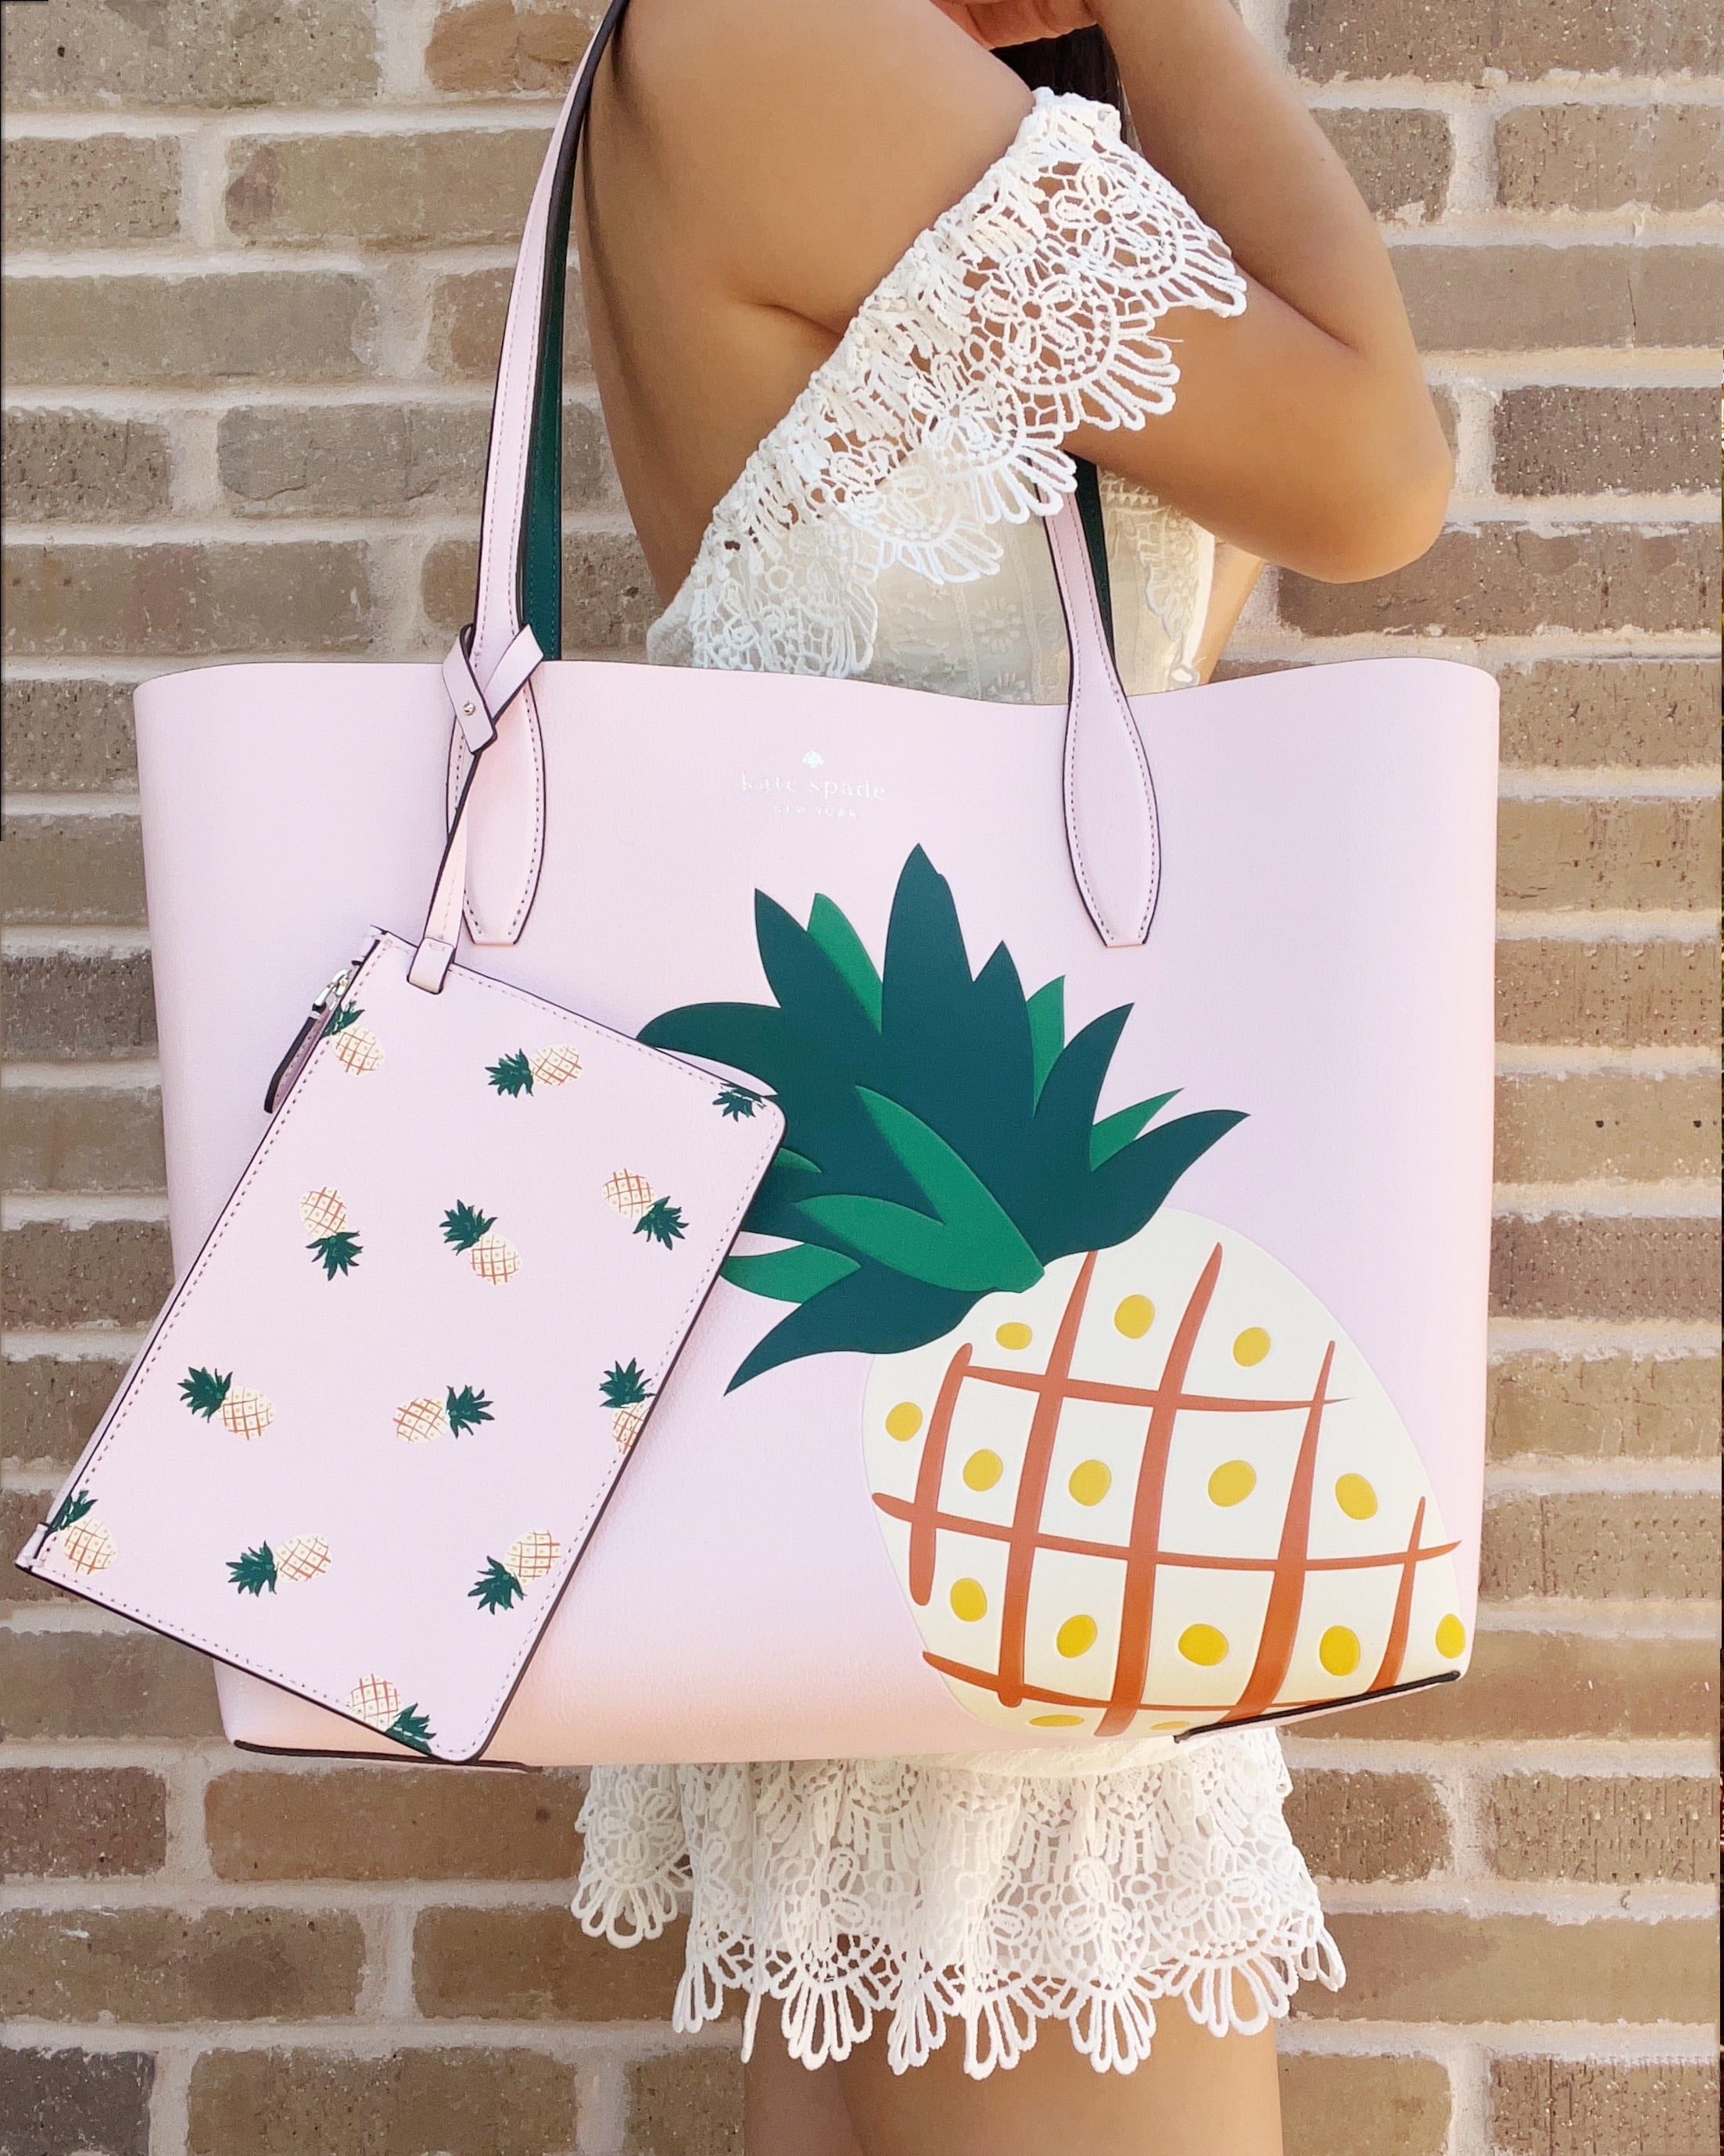 Kate Spade Pineapple Coin Purse | Novelty bags, Fun bags, Pineapple fashion